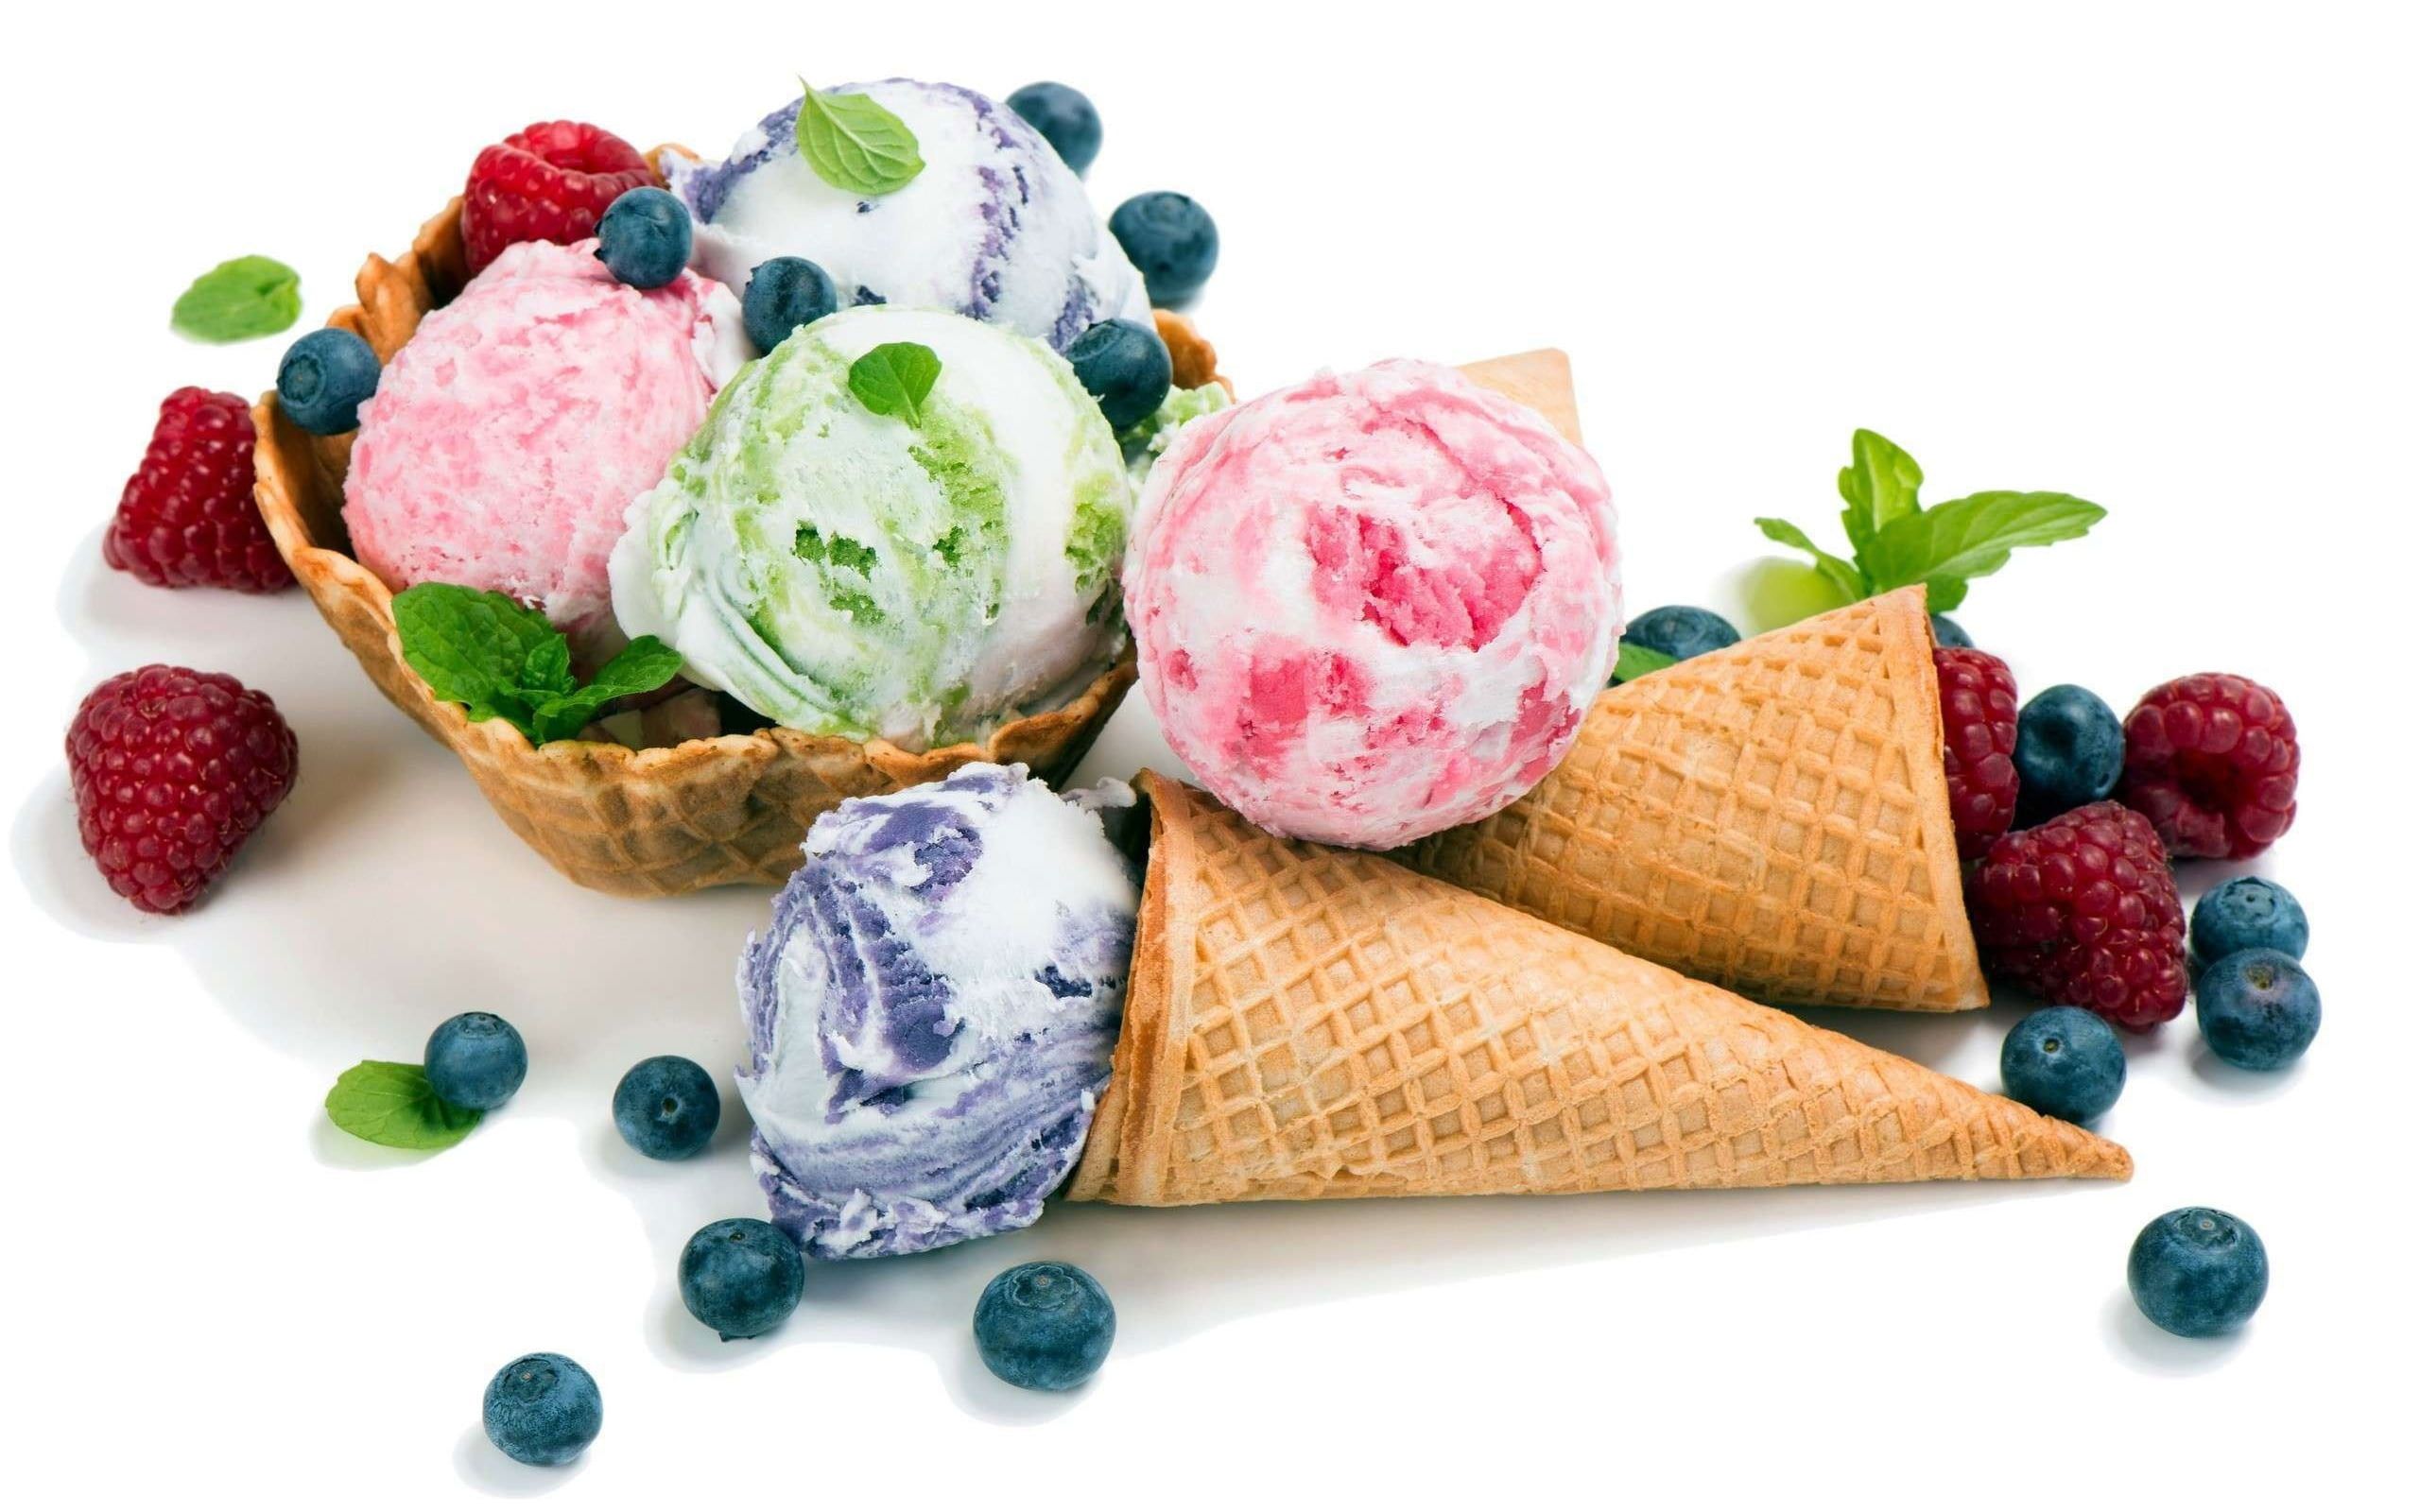 Ice Cream Wallpaper, Food, Fruit, Berries, Food And Drink, Berry Fruit